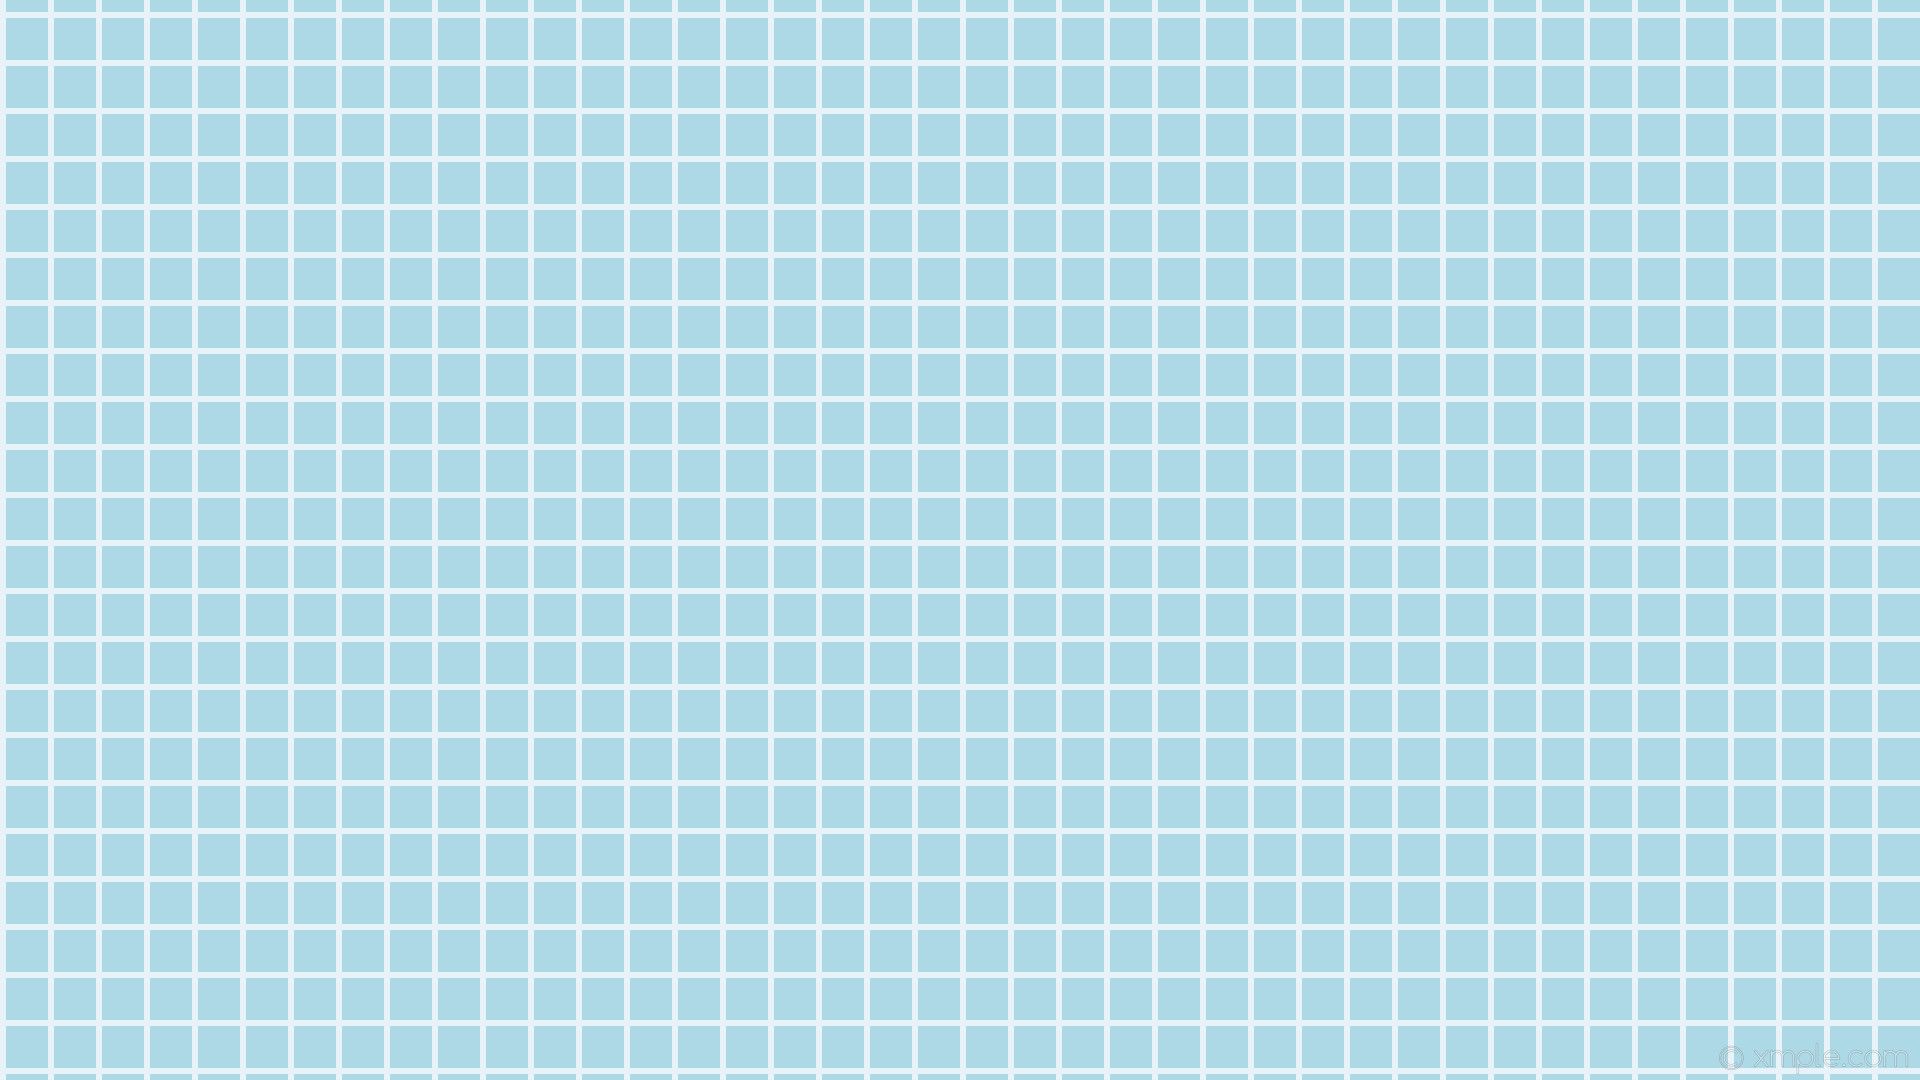 Aesthetic Baby Blue Wallpapers Free download - PixelsTalk.Net